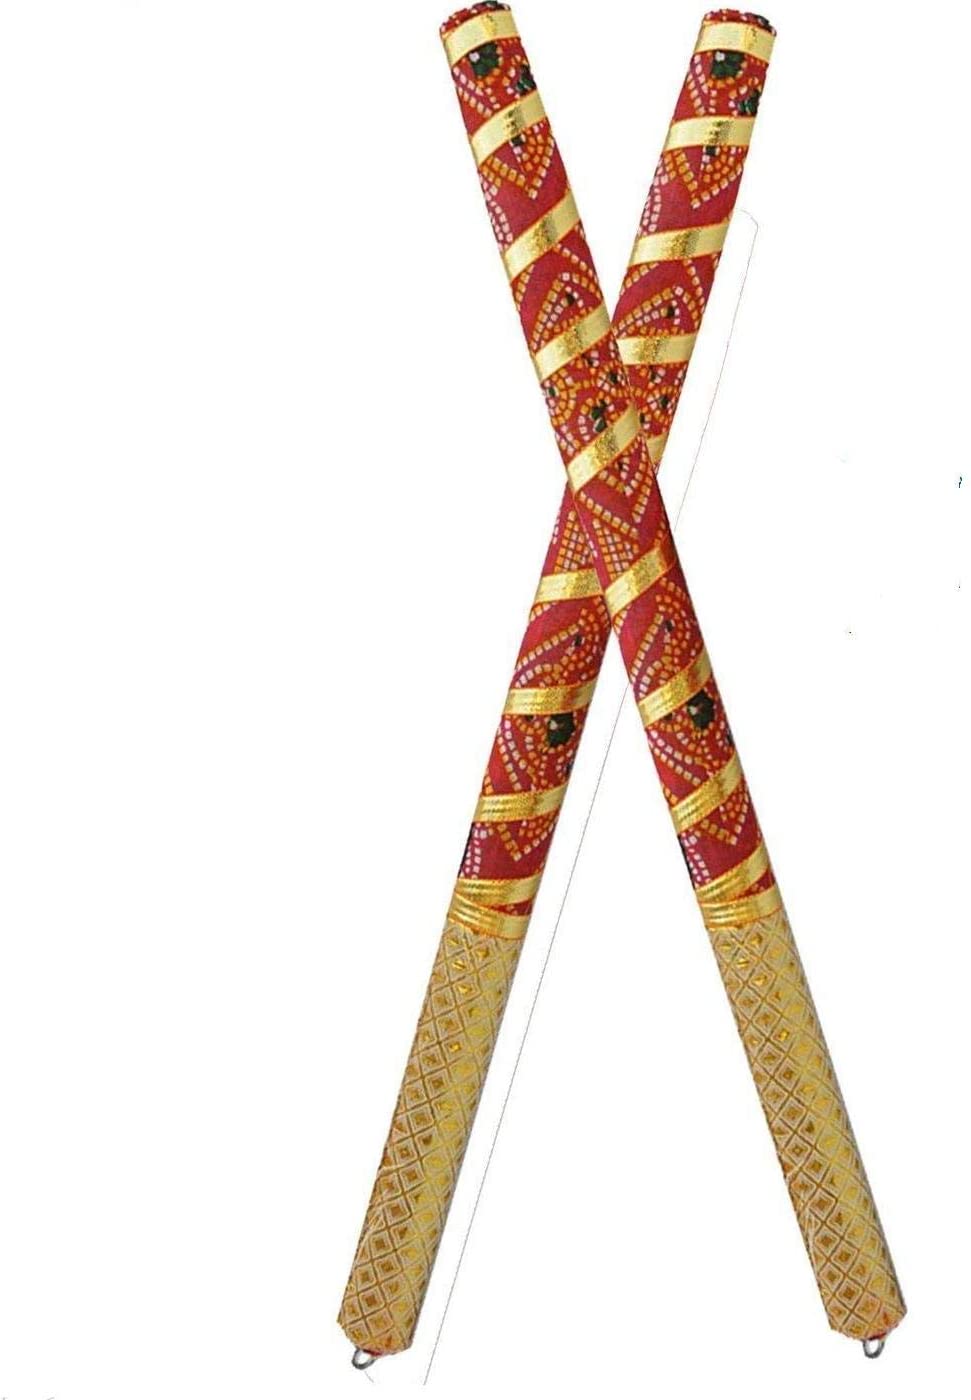 New Jaipur Handicraft Dandiya Sticks New Jaipur Handicraft Pack of 10 pair Golden Chundari Dandiya Sticks💃🥢/ Golden Chundari Dandiya Stick 🔥/ Dandiya For Garba